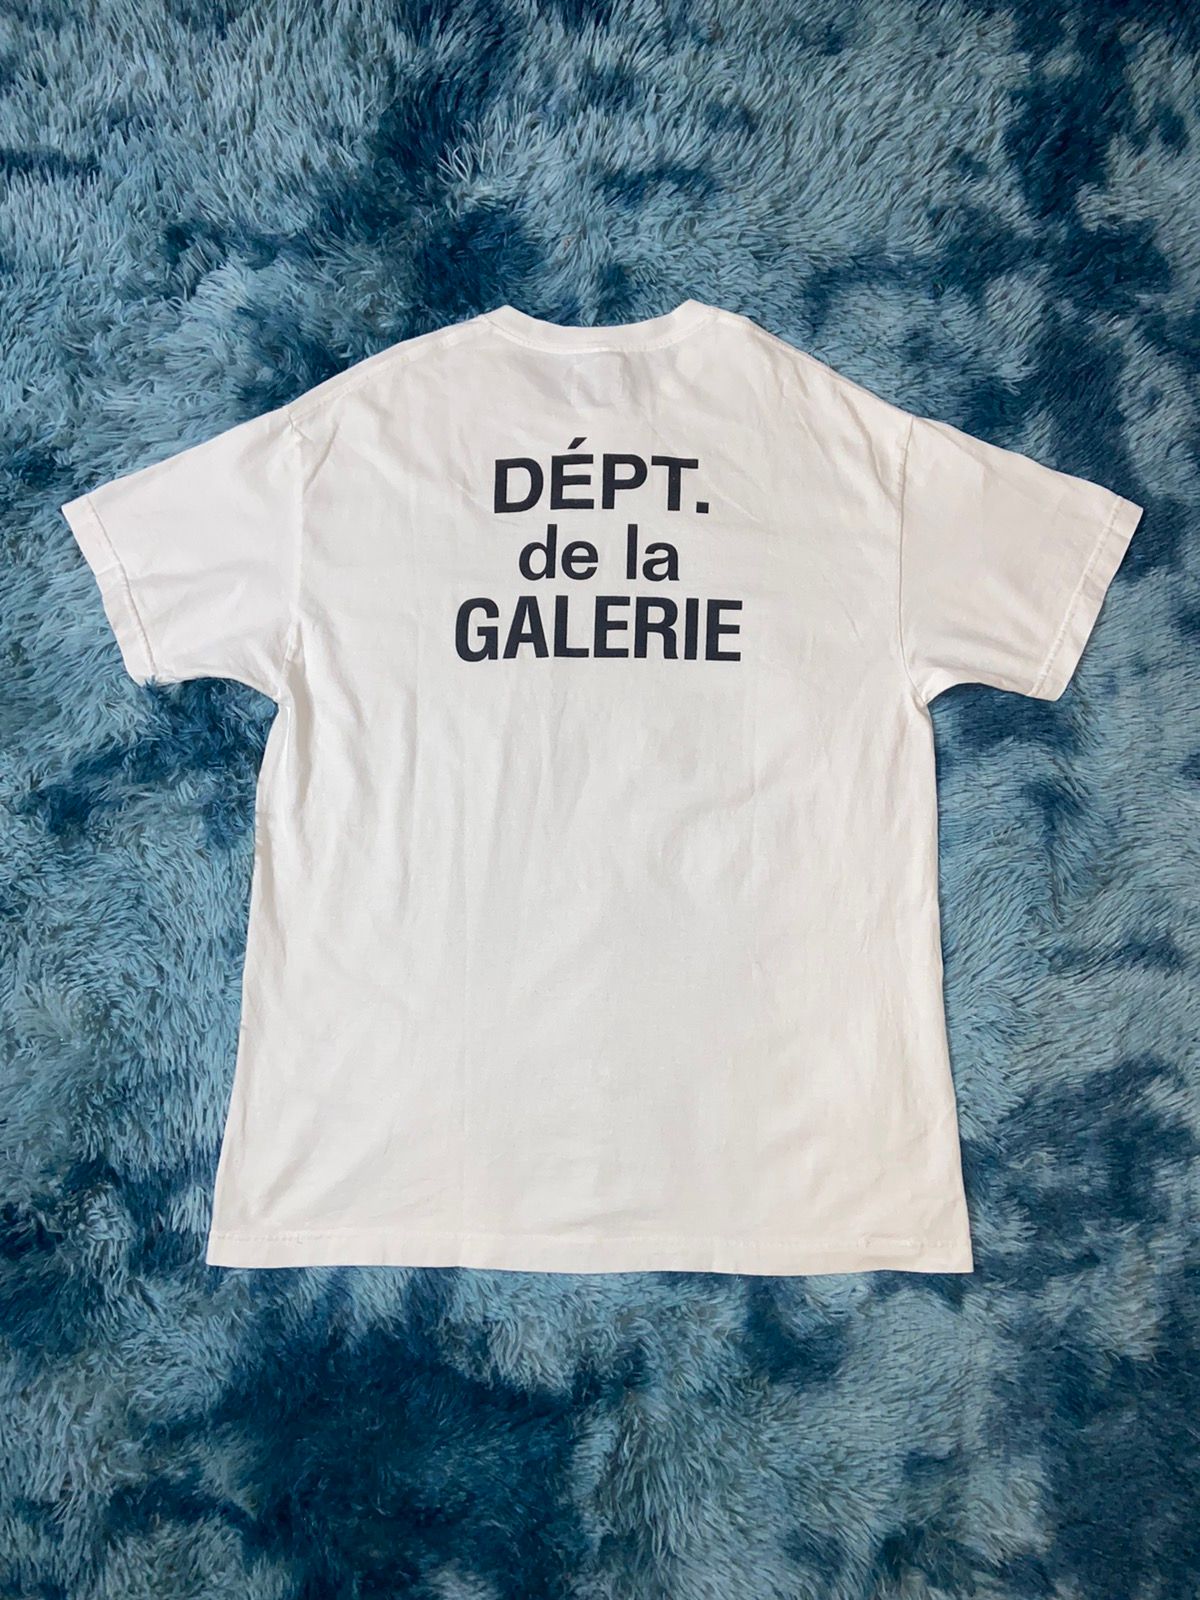 Pre-owned Gallery Dept. . French Logo Tee White Black Dépt De La Galerie